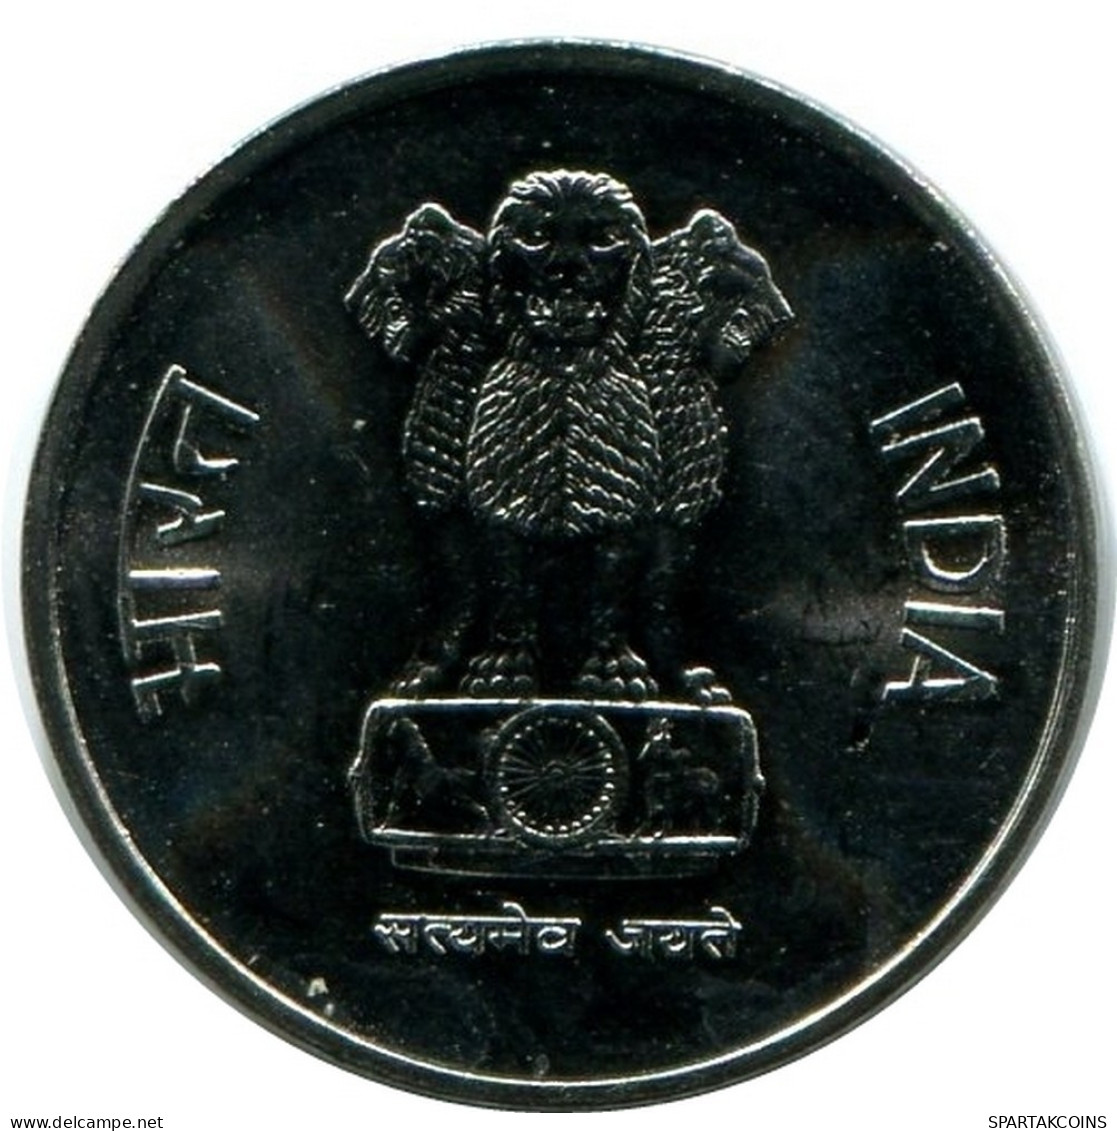 10 PAISE 1988 INDIA UNC Coin #M10105.U.A - Inde